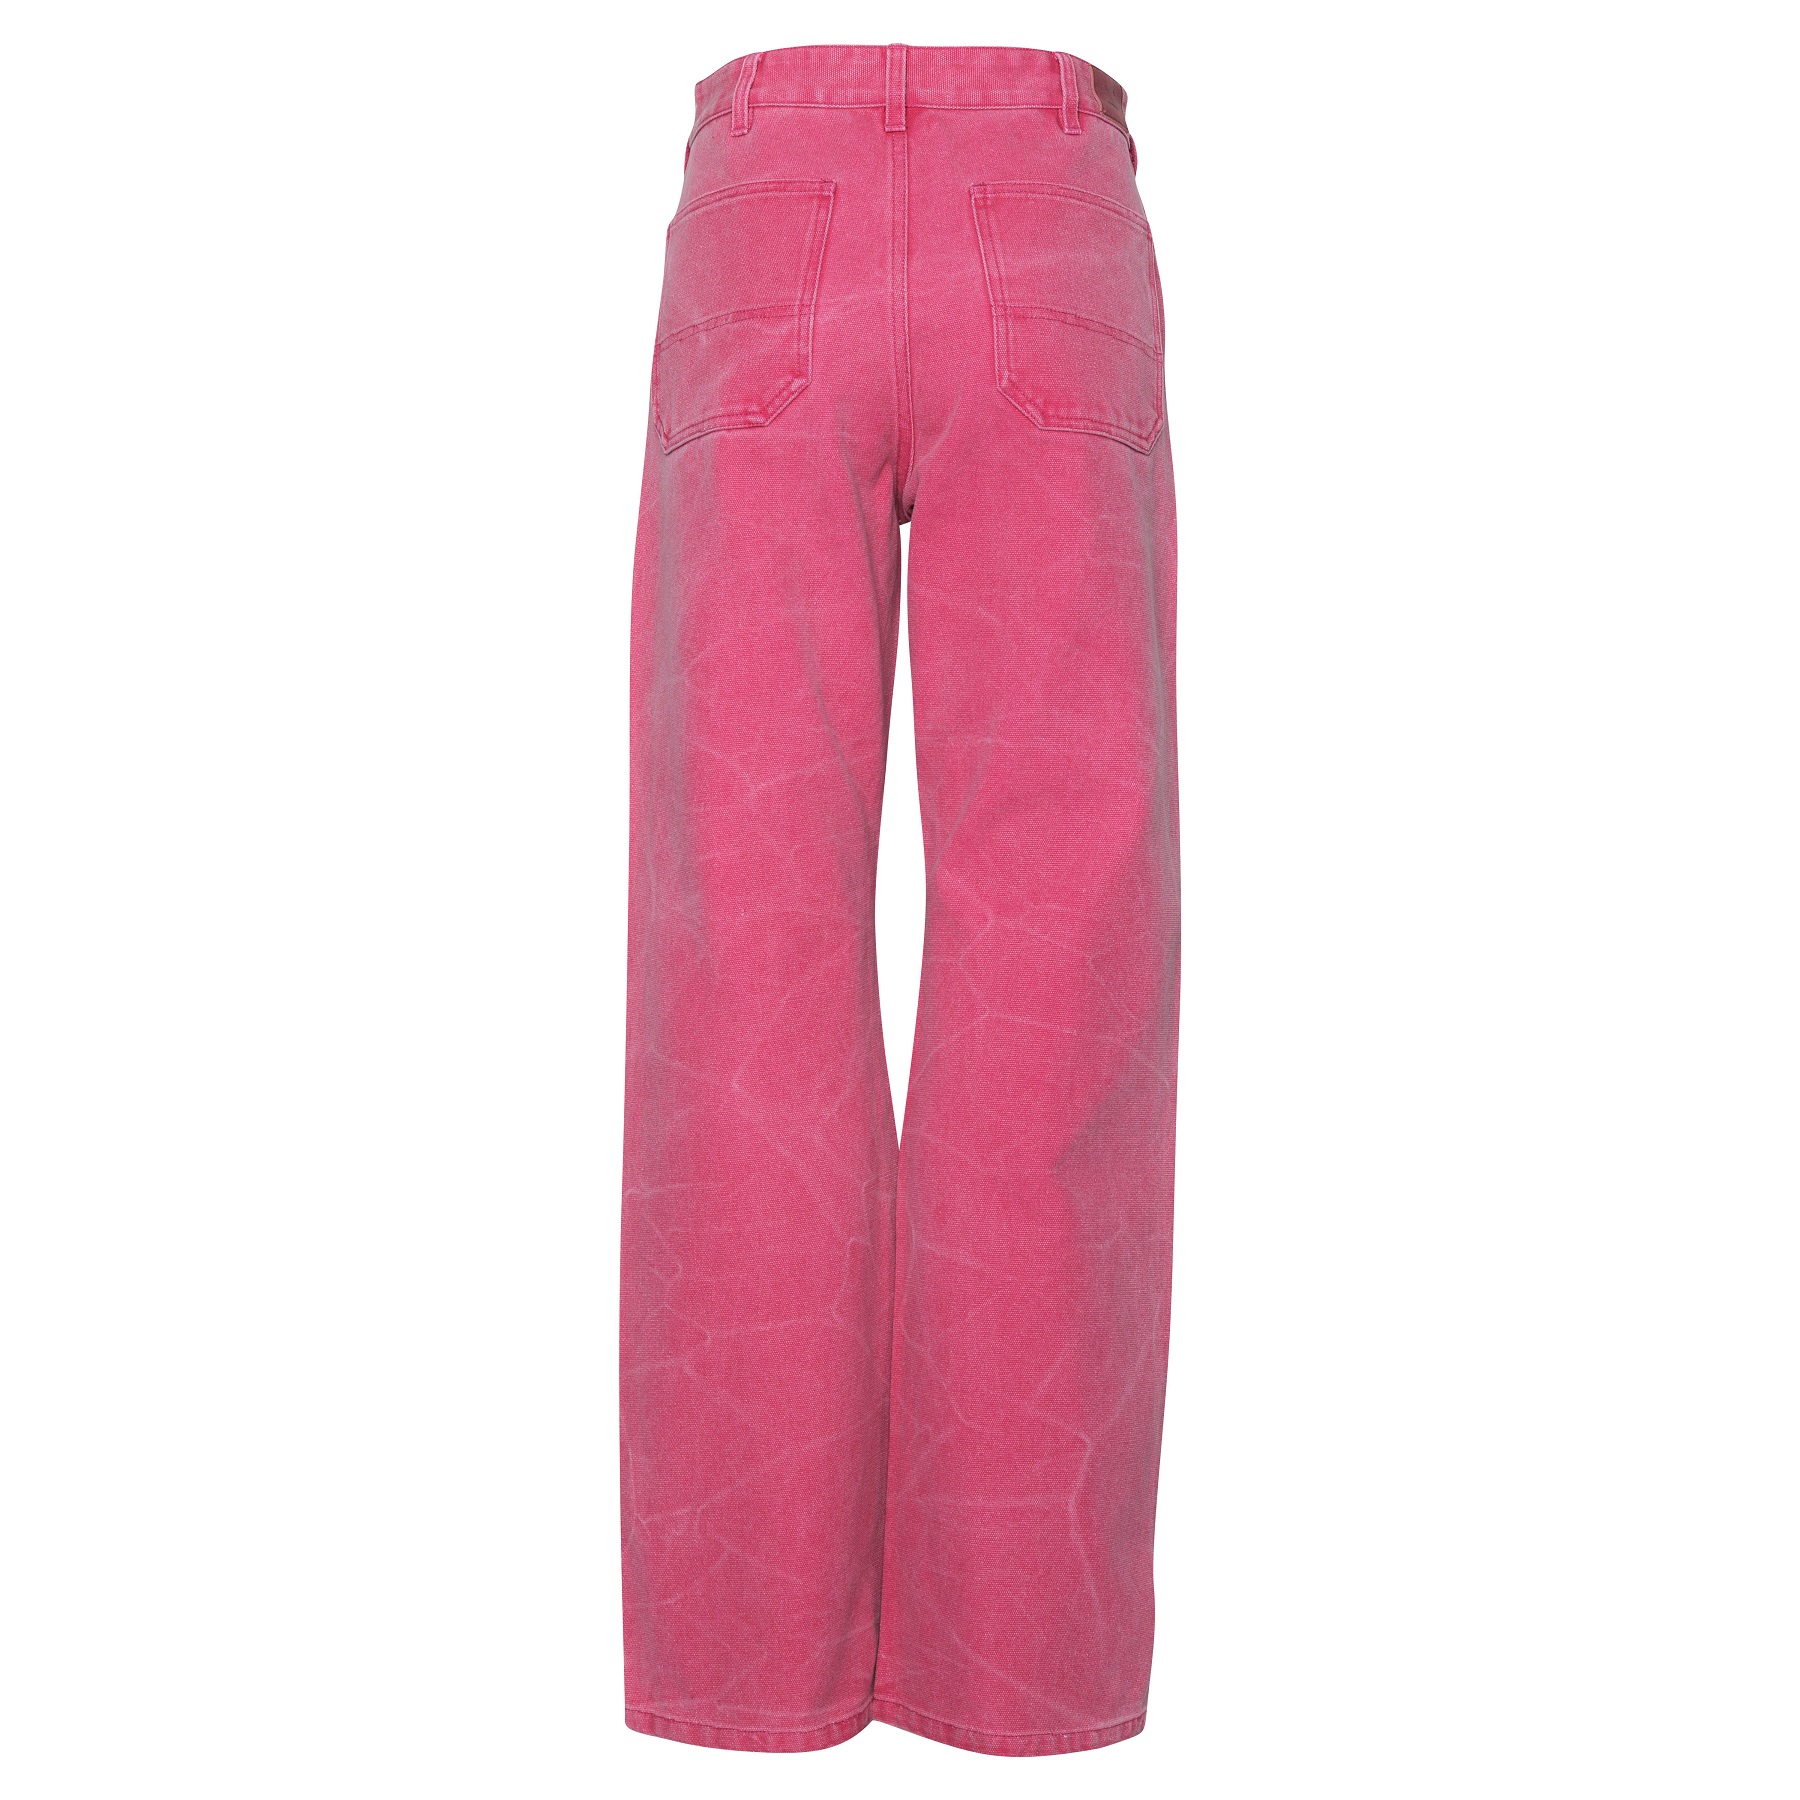 Acne Studios Cotton Canvas Trouser in Fuchsia Pink